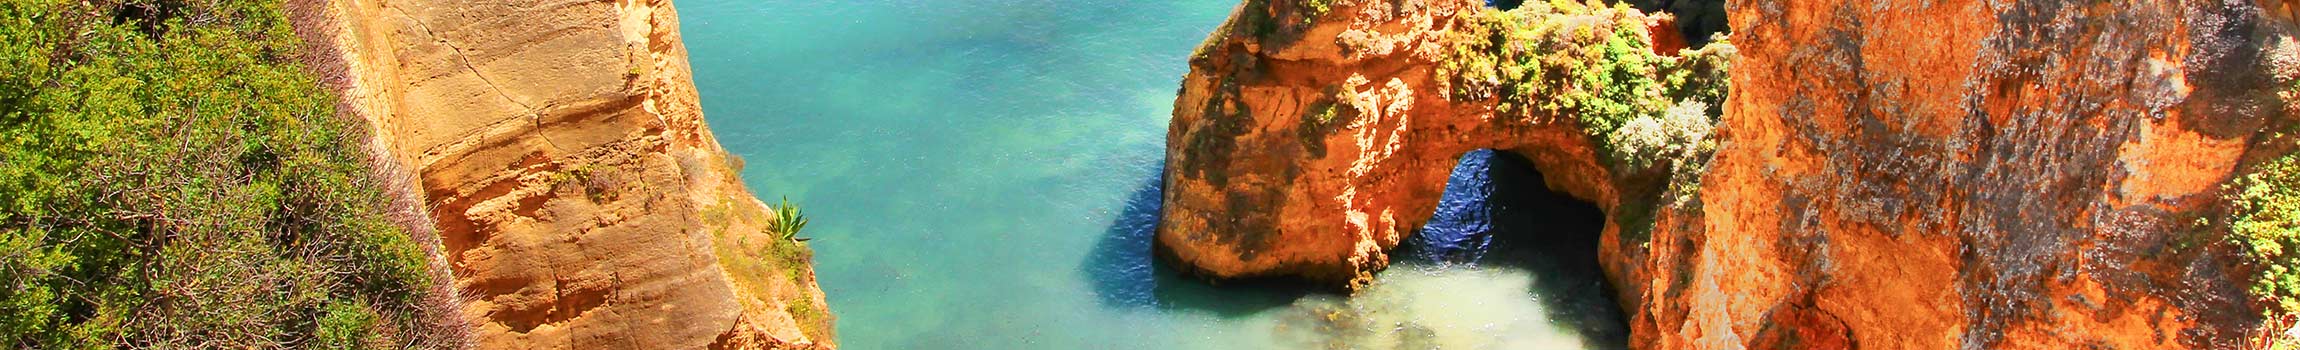 Atemberaubende Felsformationen an der Algarve-Küste